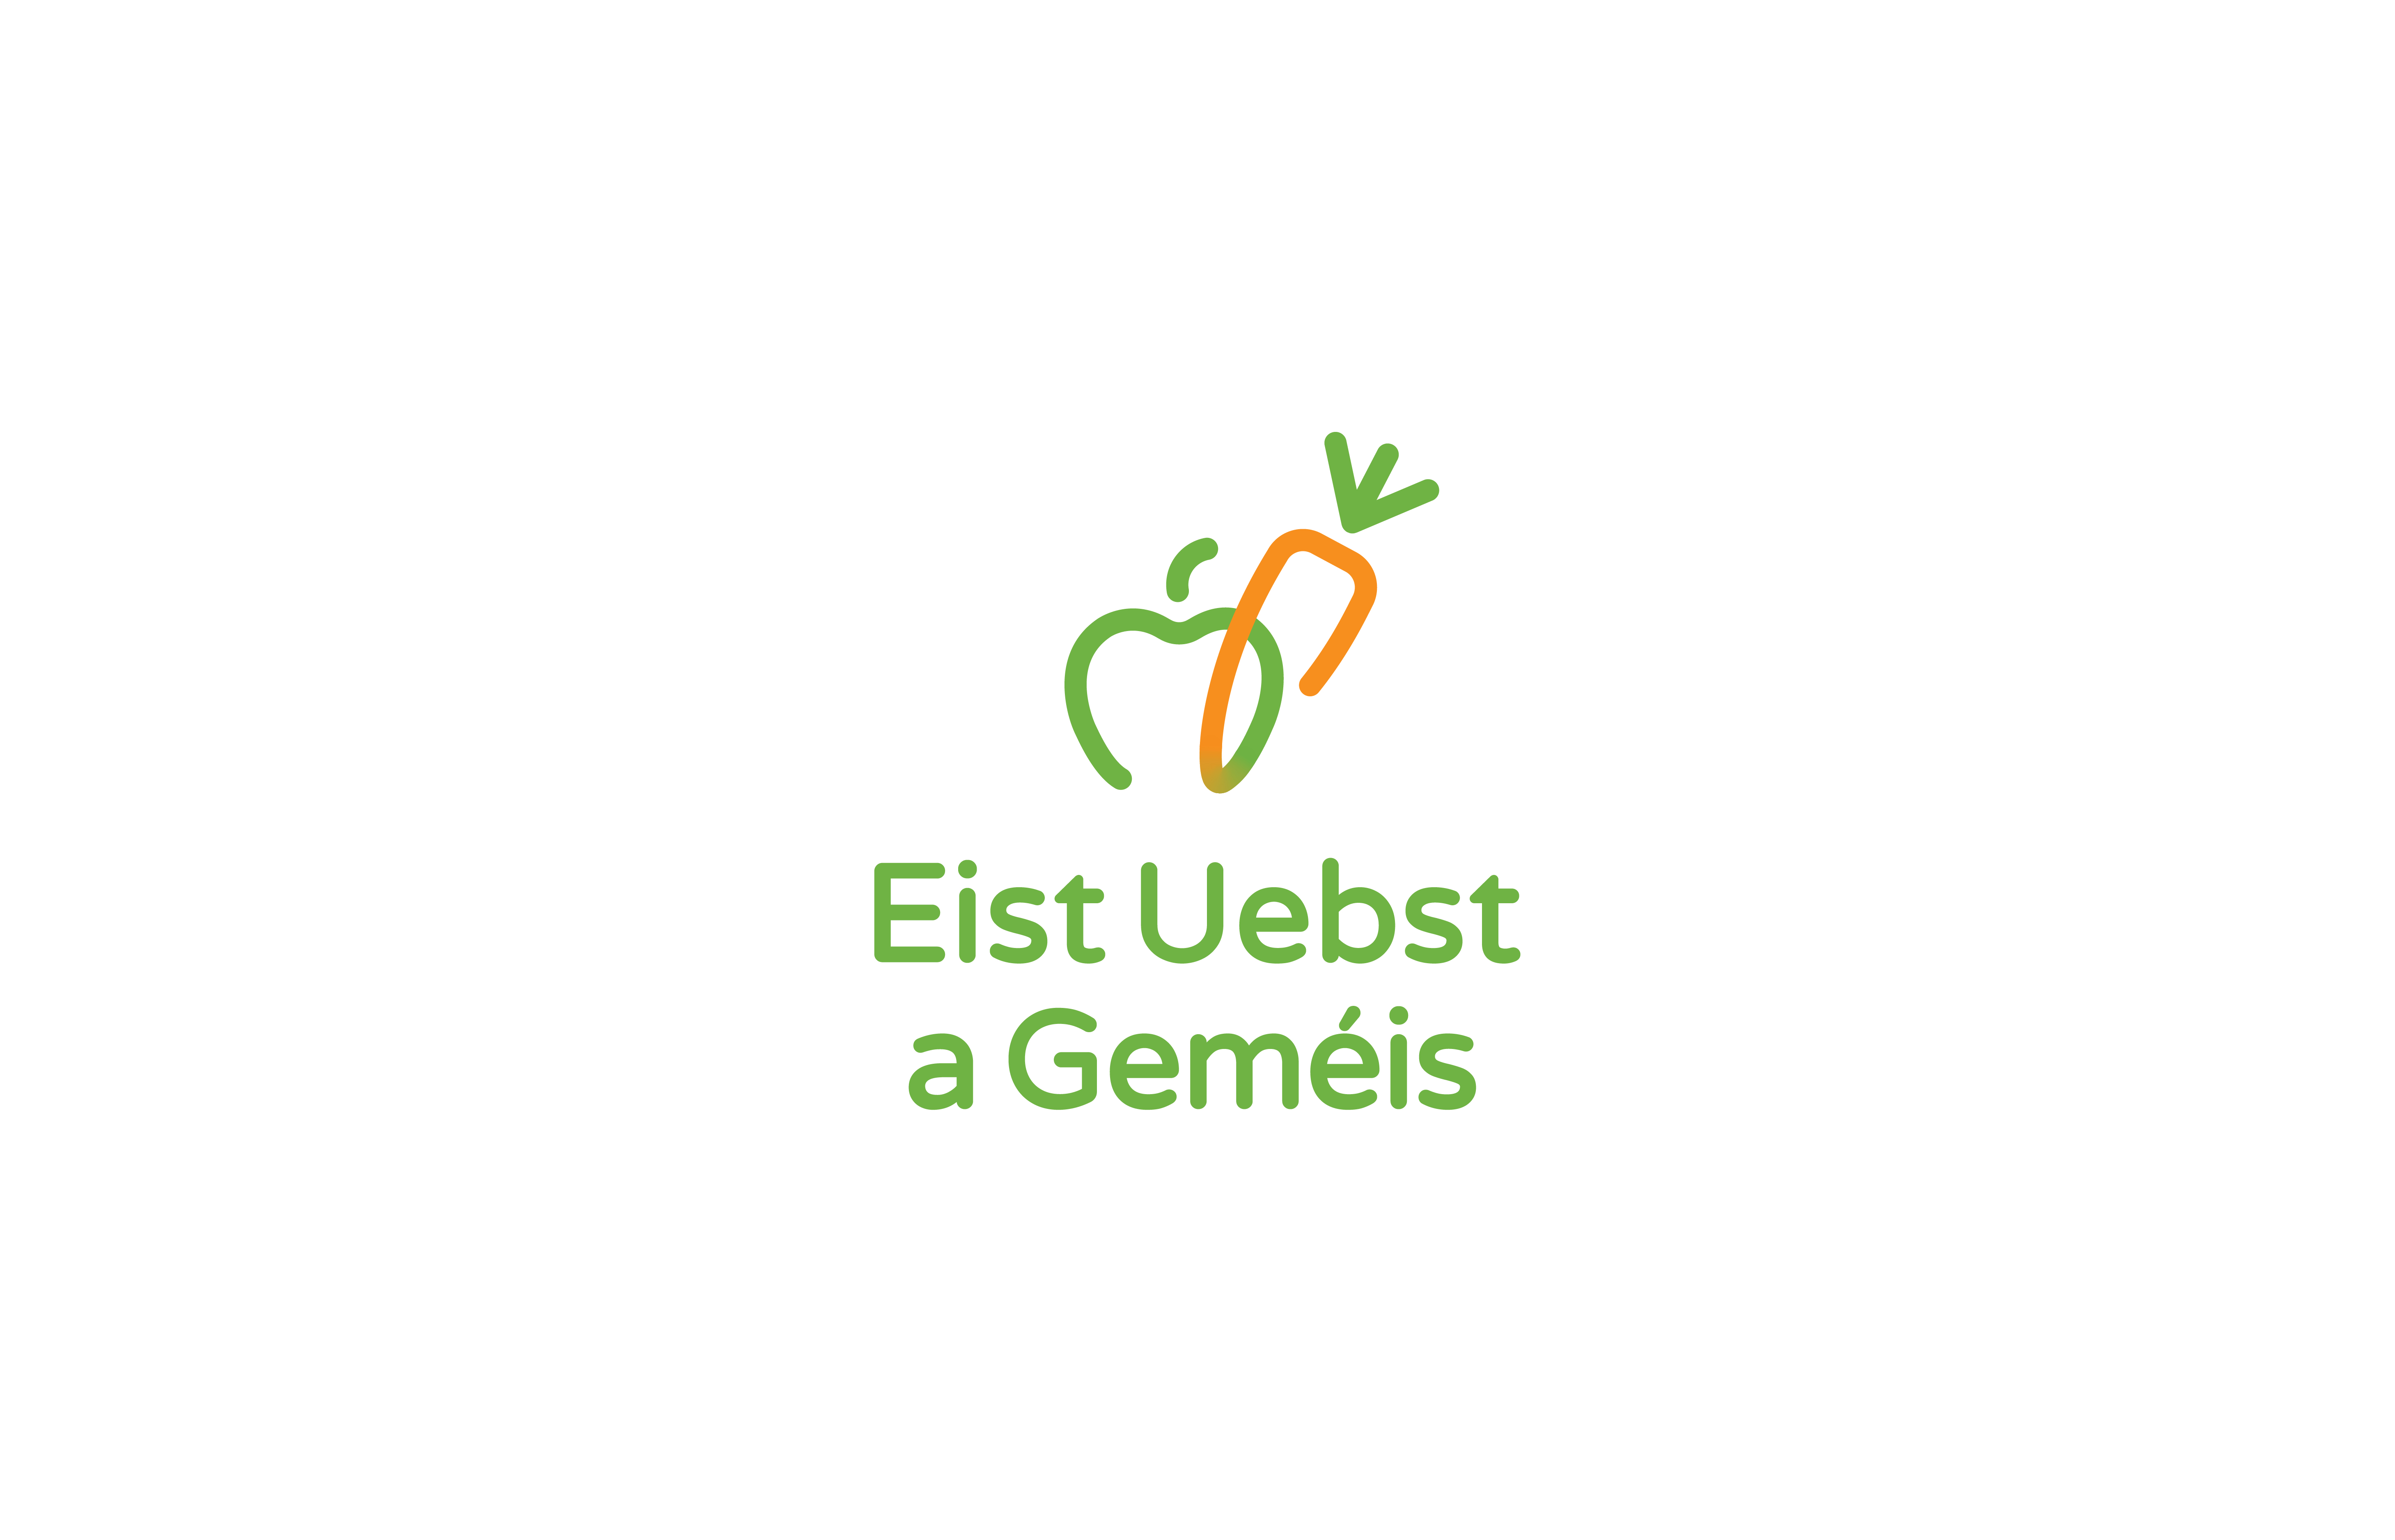 078-0217002_Moskito_Visuels Logos-EistUebst-1